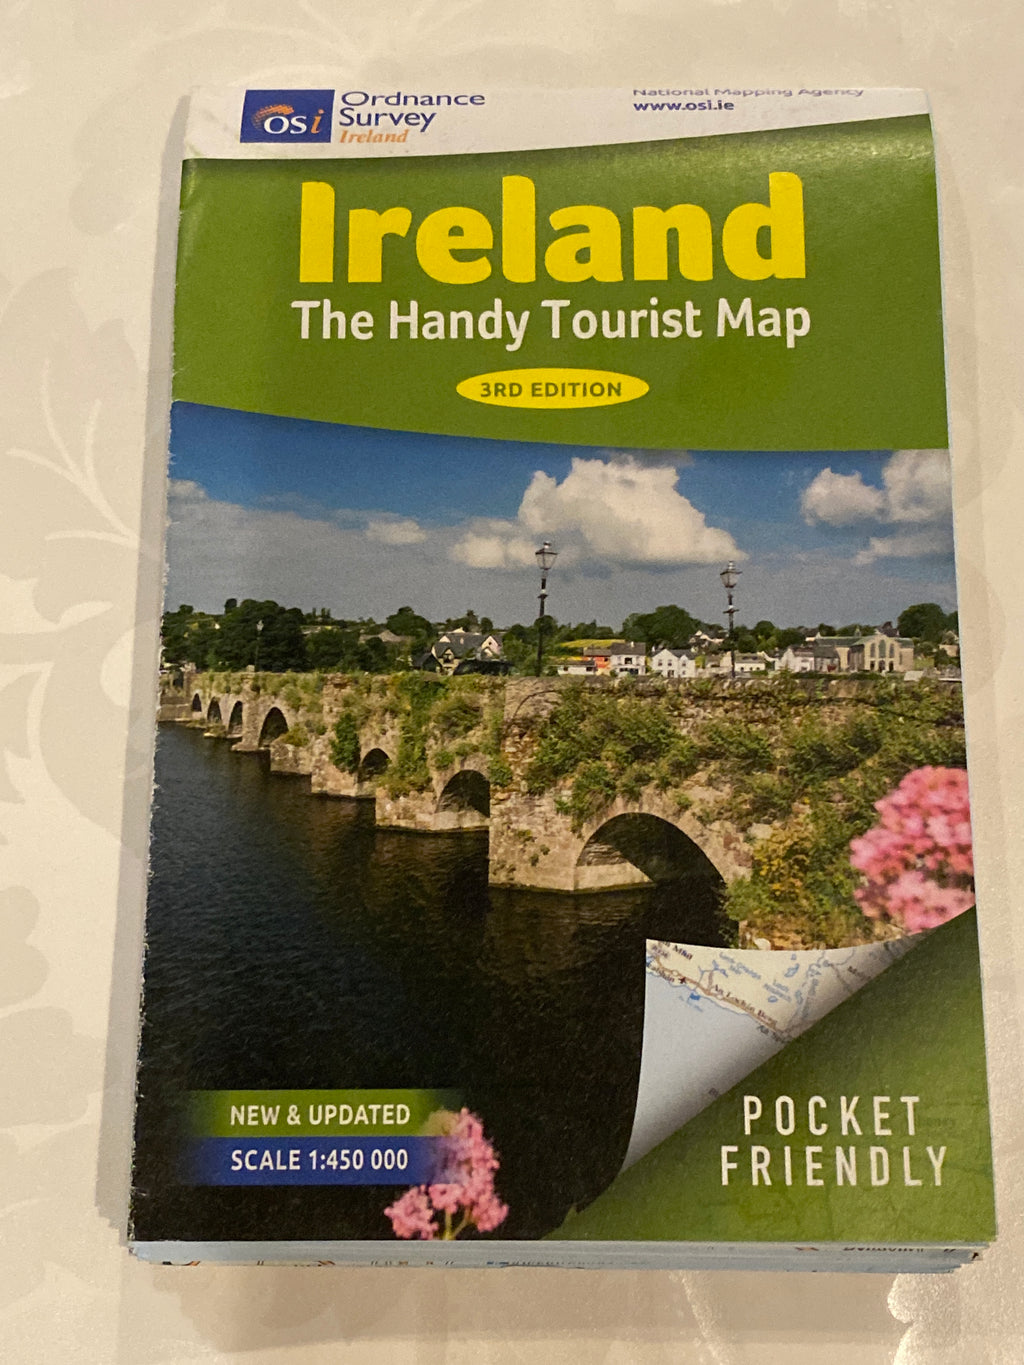 Ireland hand tourist map